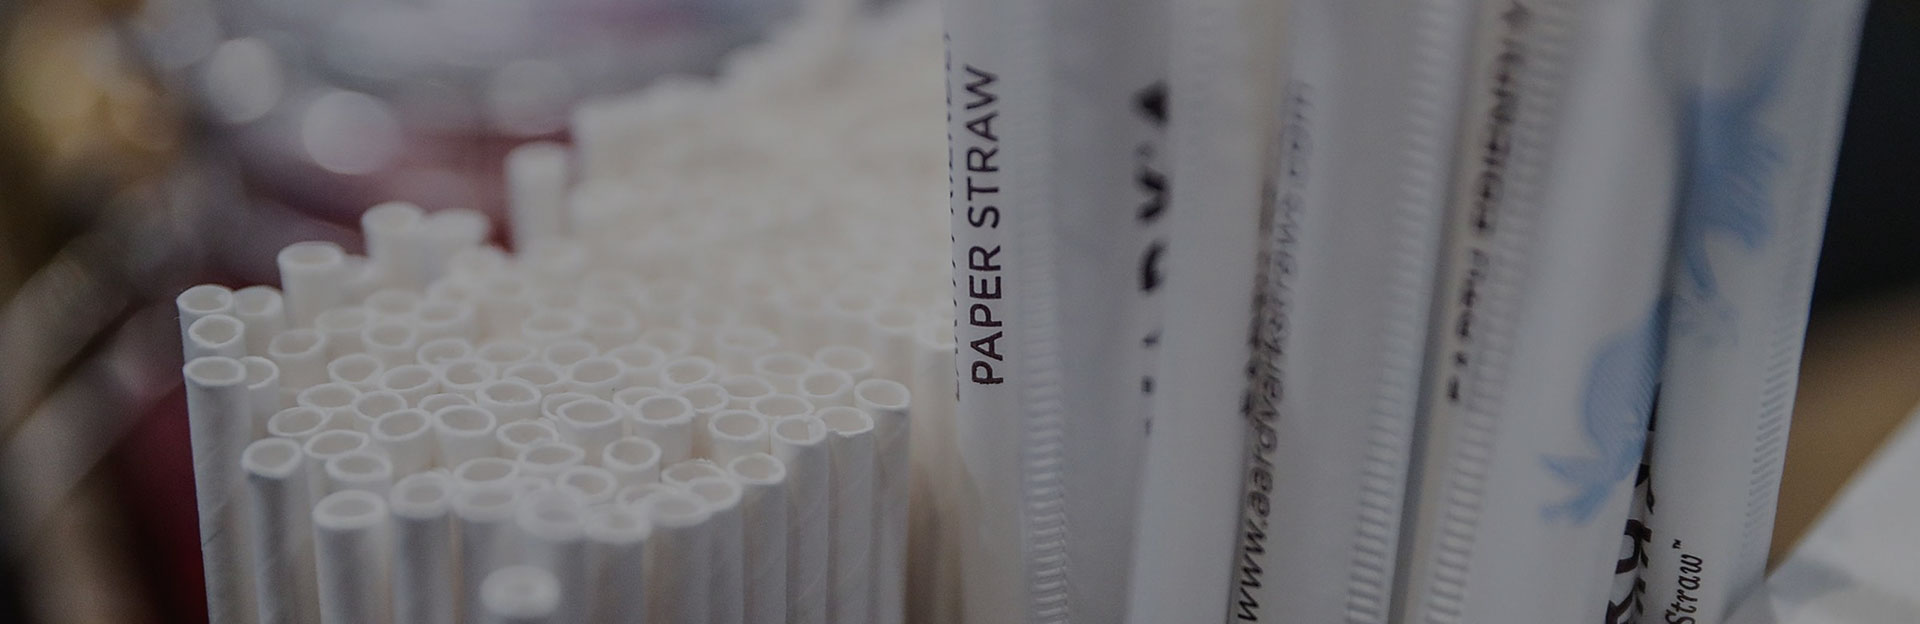 Biodegradable Straws